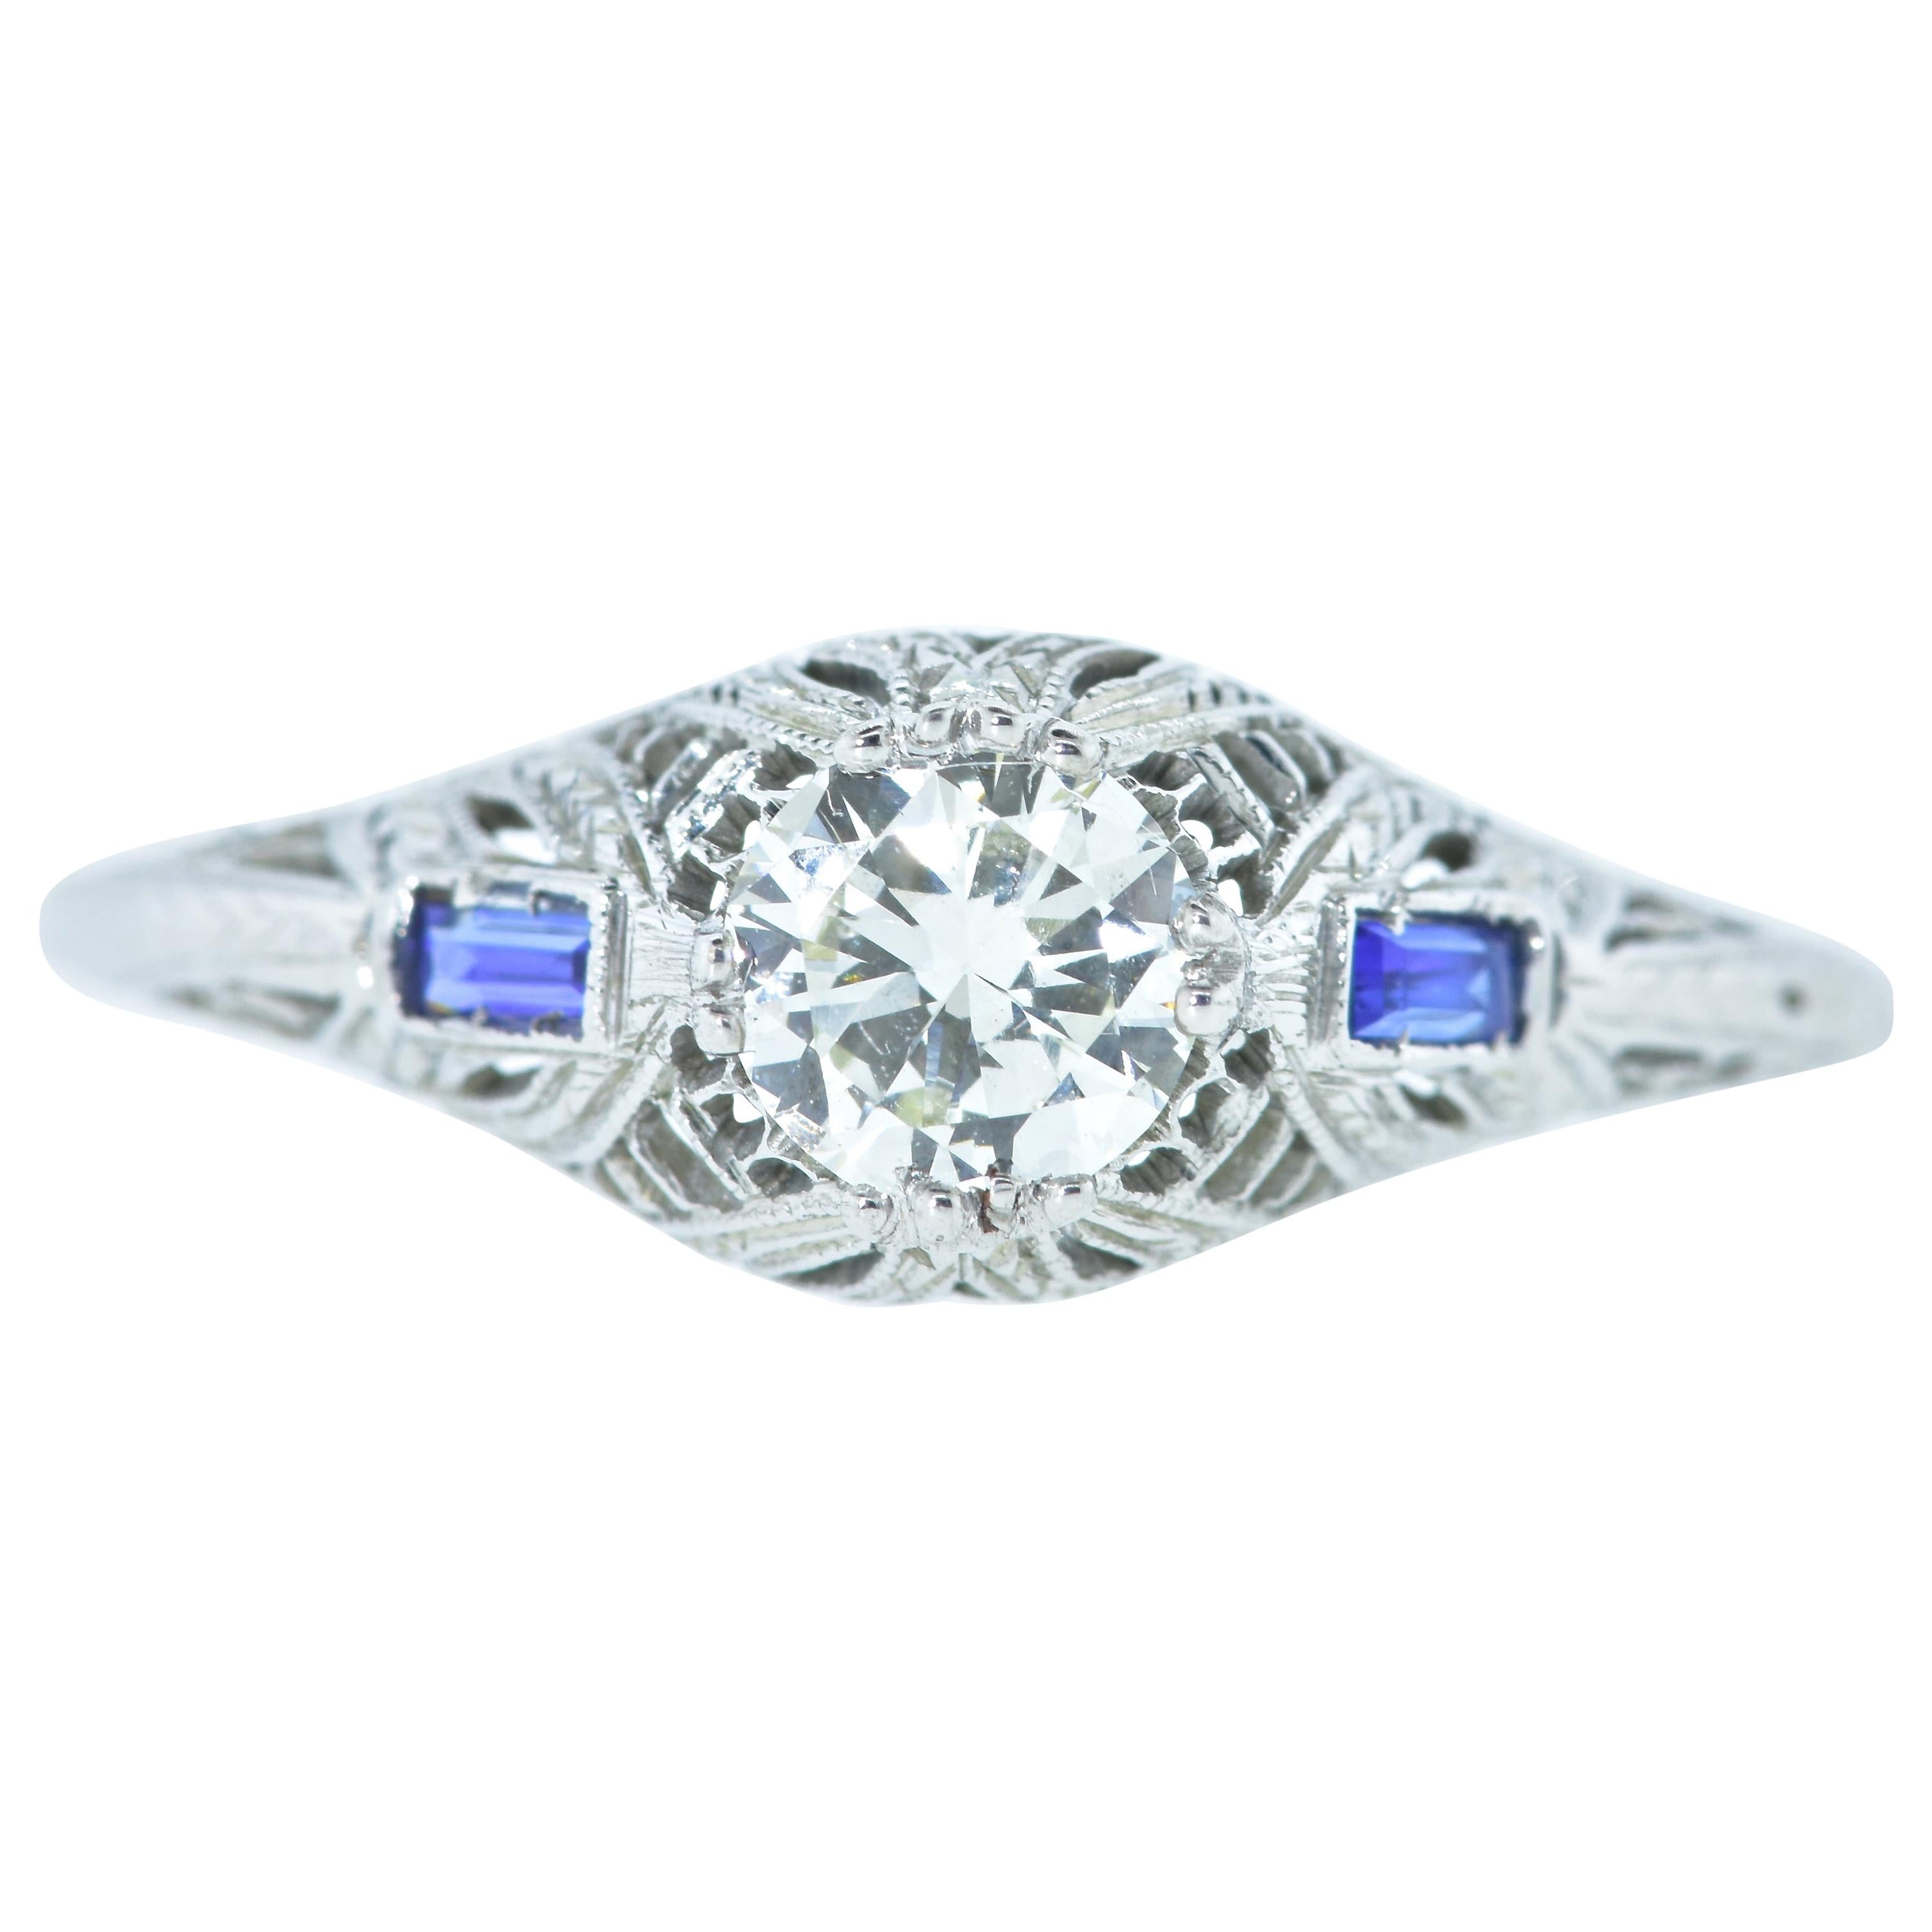 Antique Filigree Diamond and Sapphire Ring, circa 1920